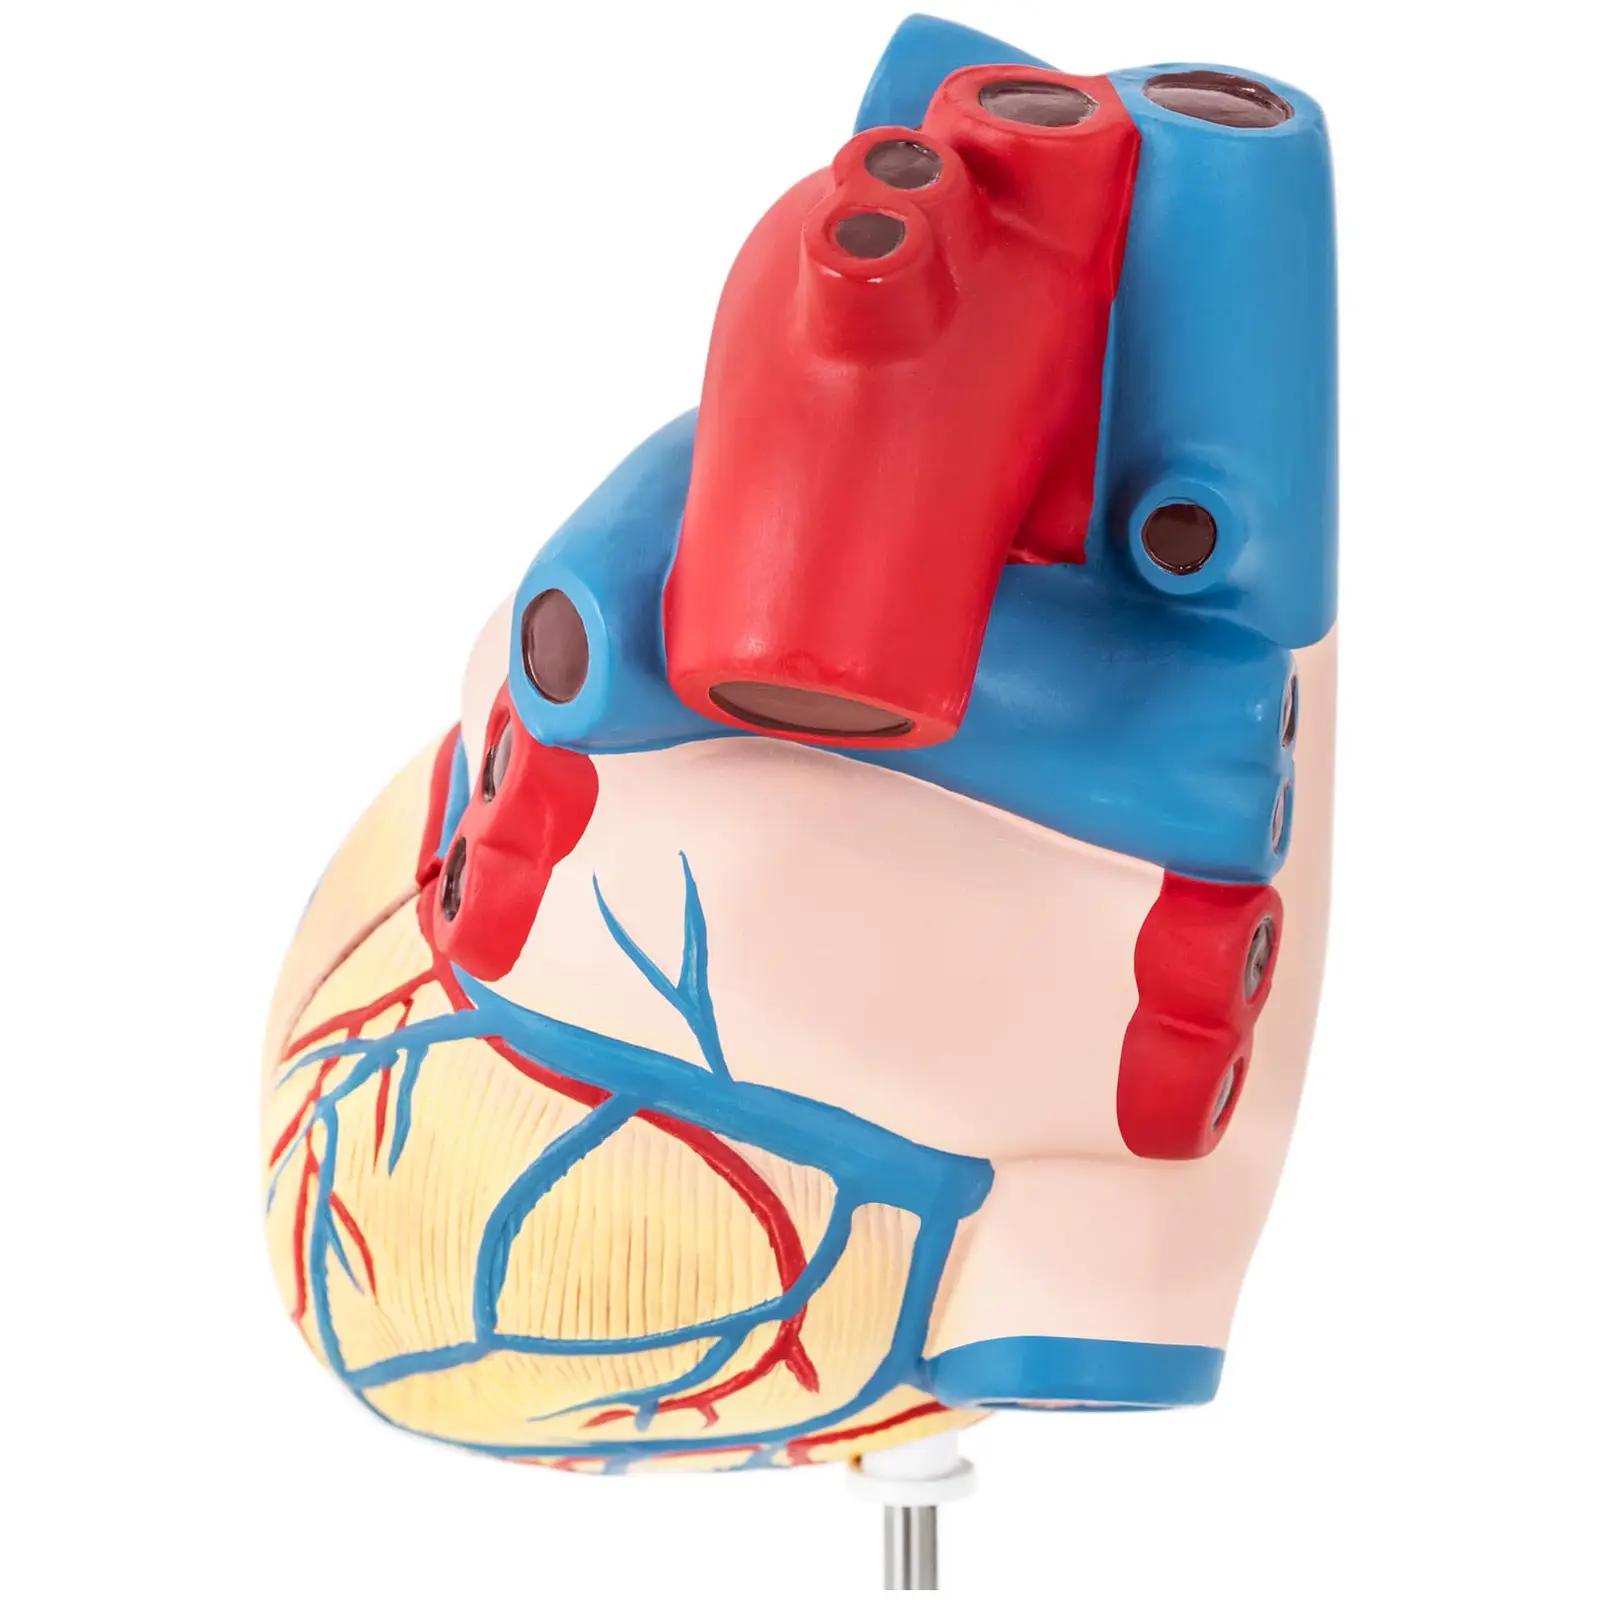 Serce - model anatomiczny